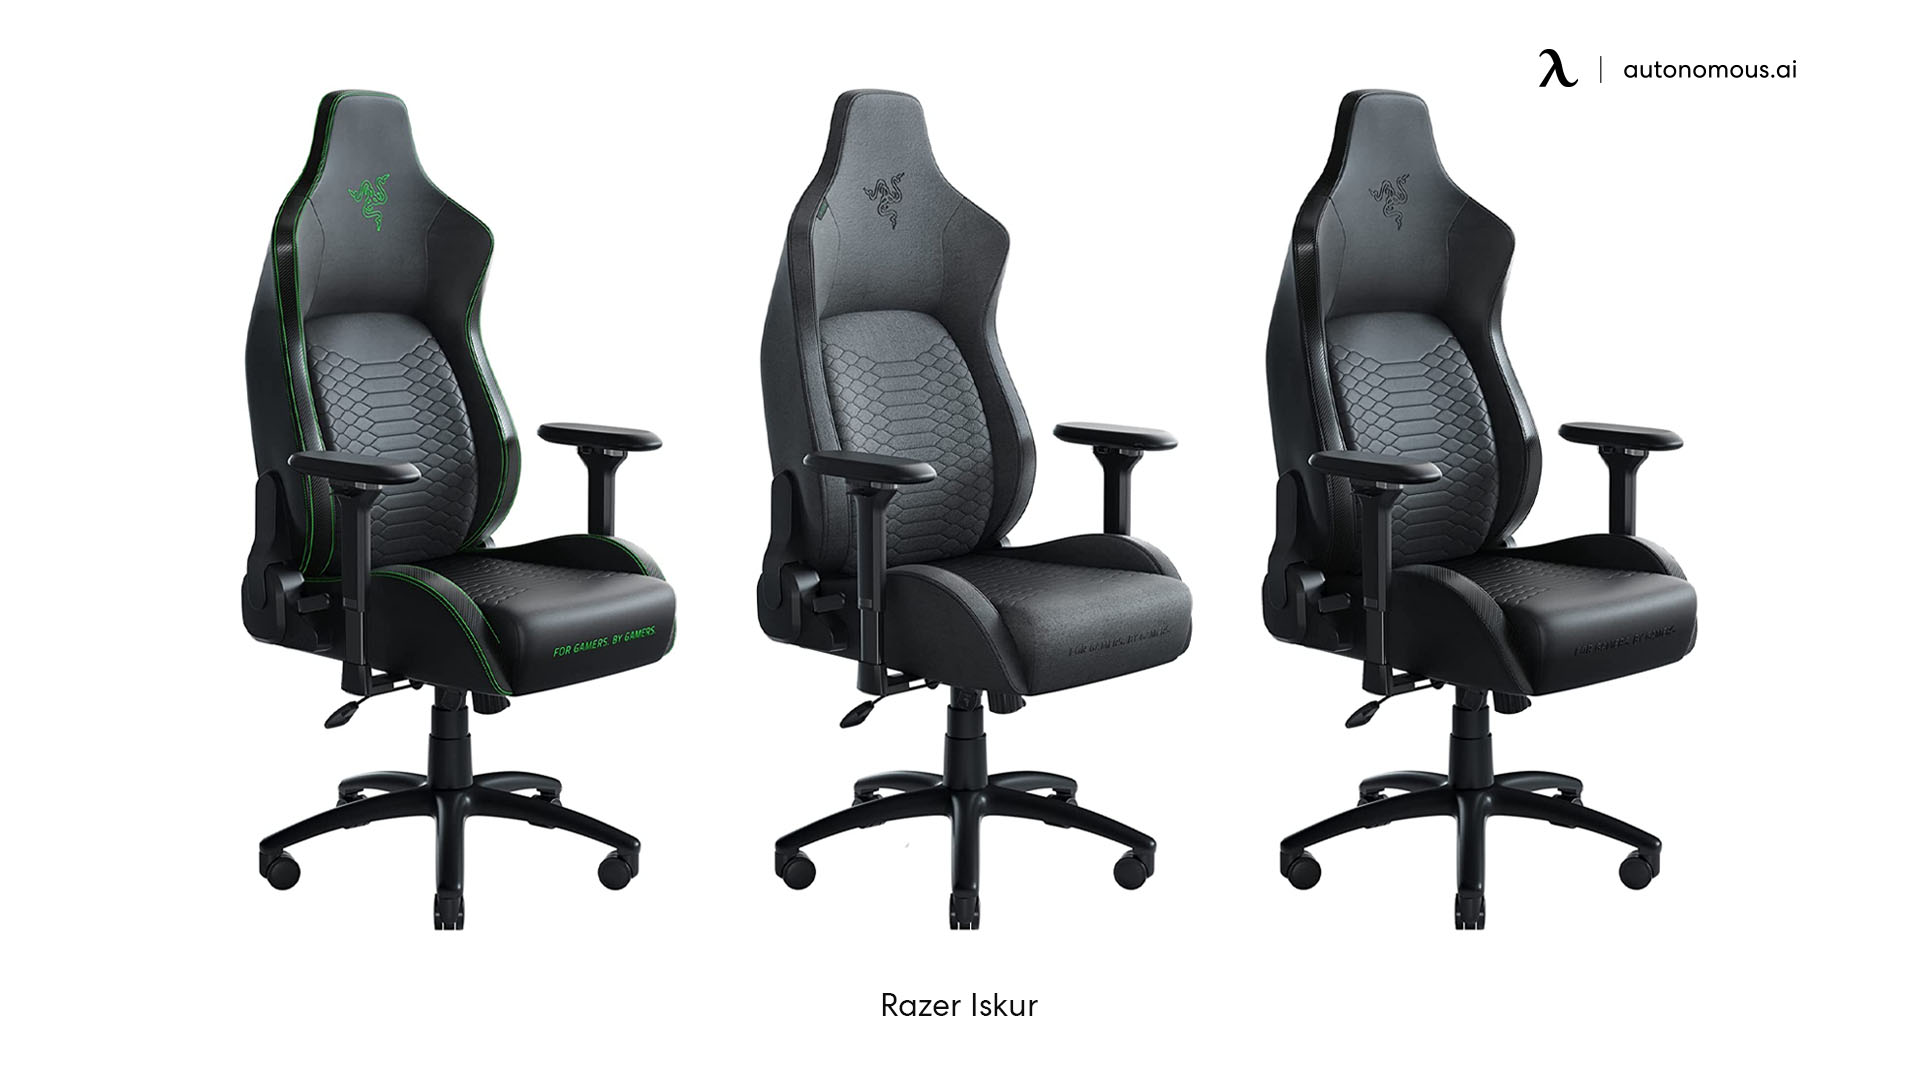 Razer Iskur ergonomic gaming chair